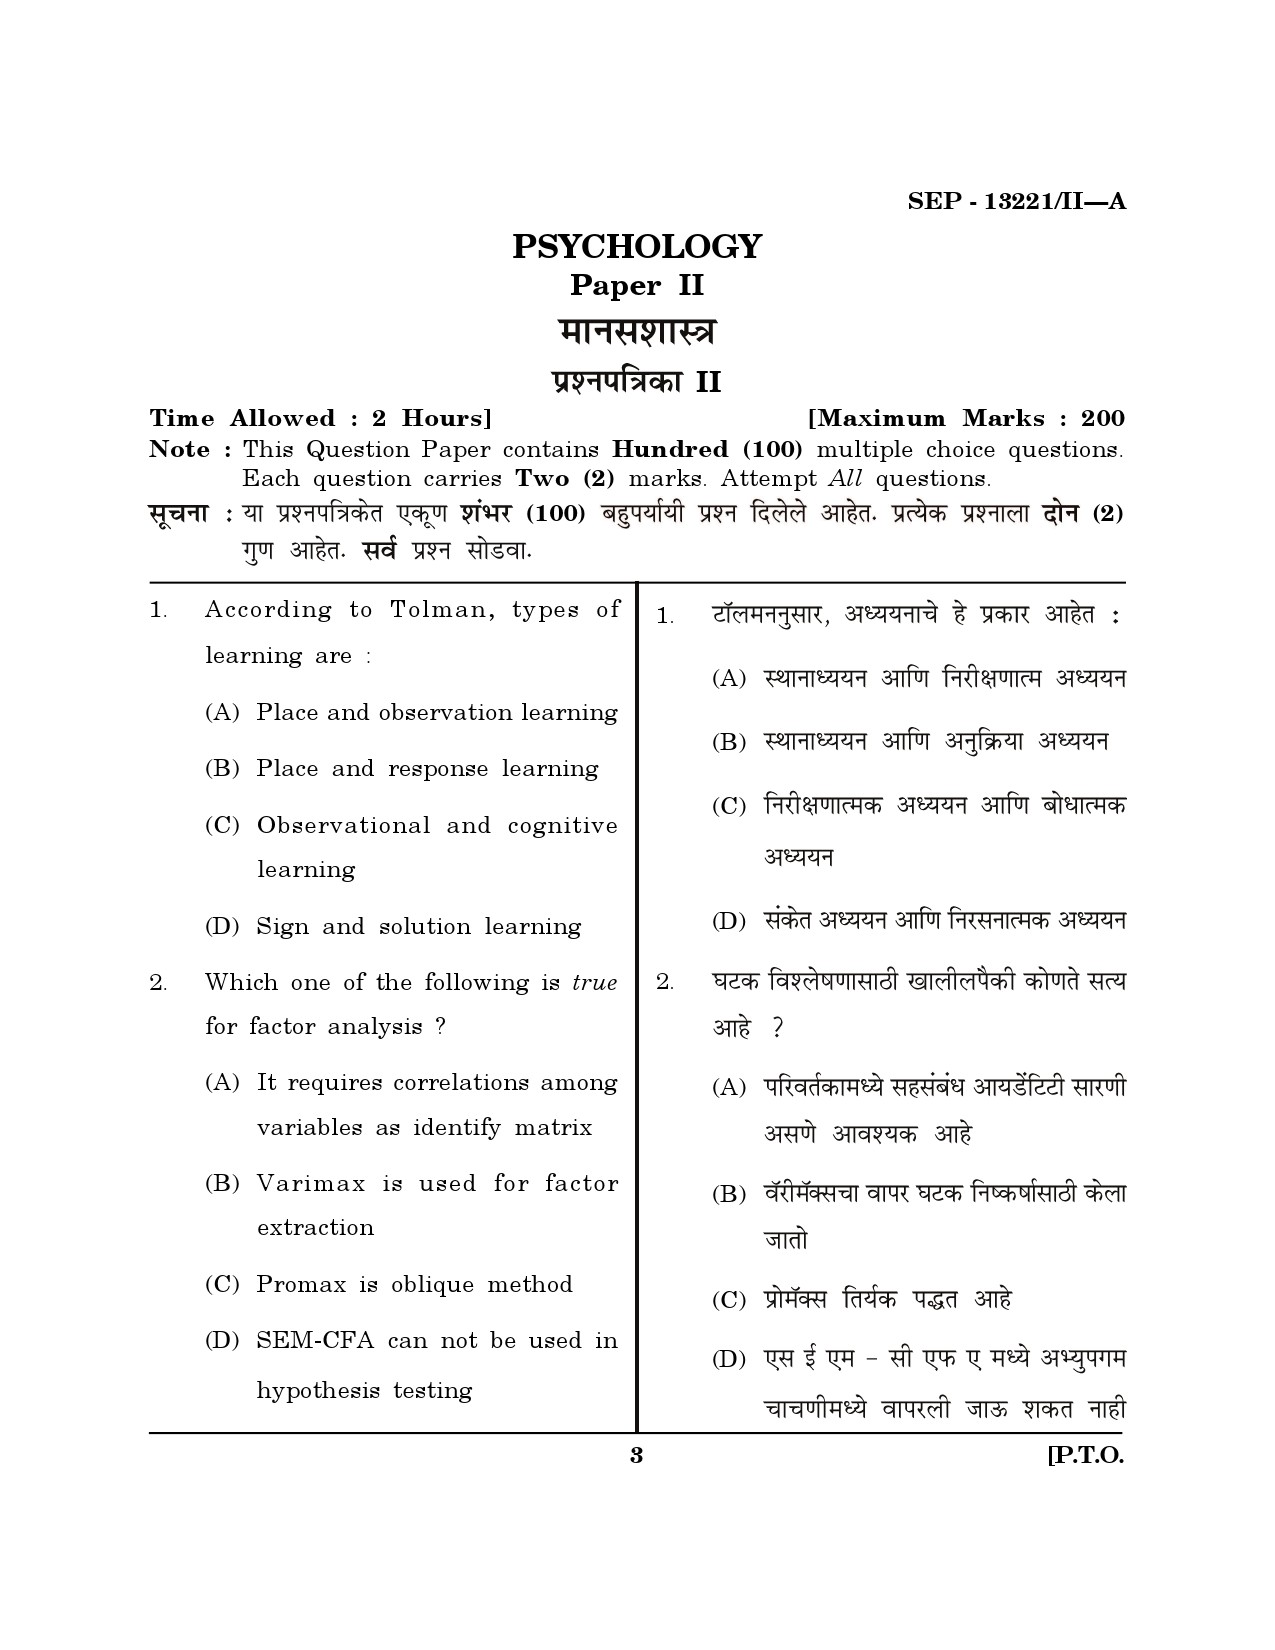 Maharashtra SET Psychology Exam Question Paper September 2021 2